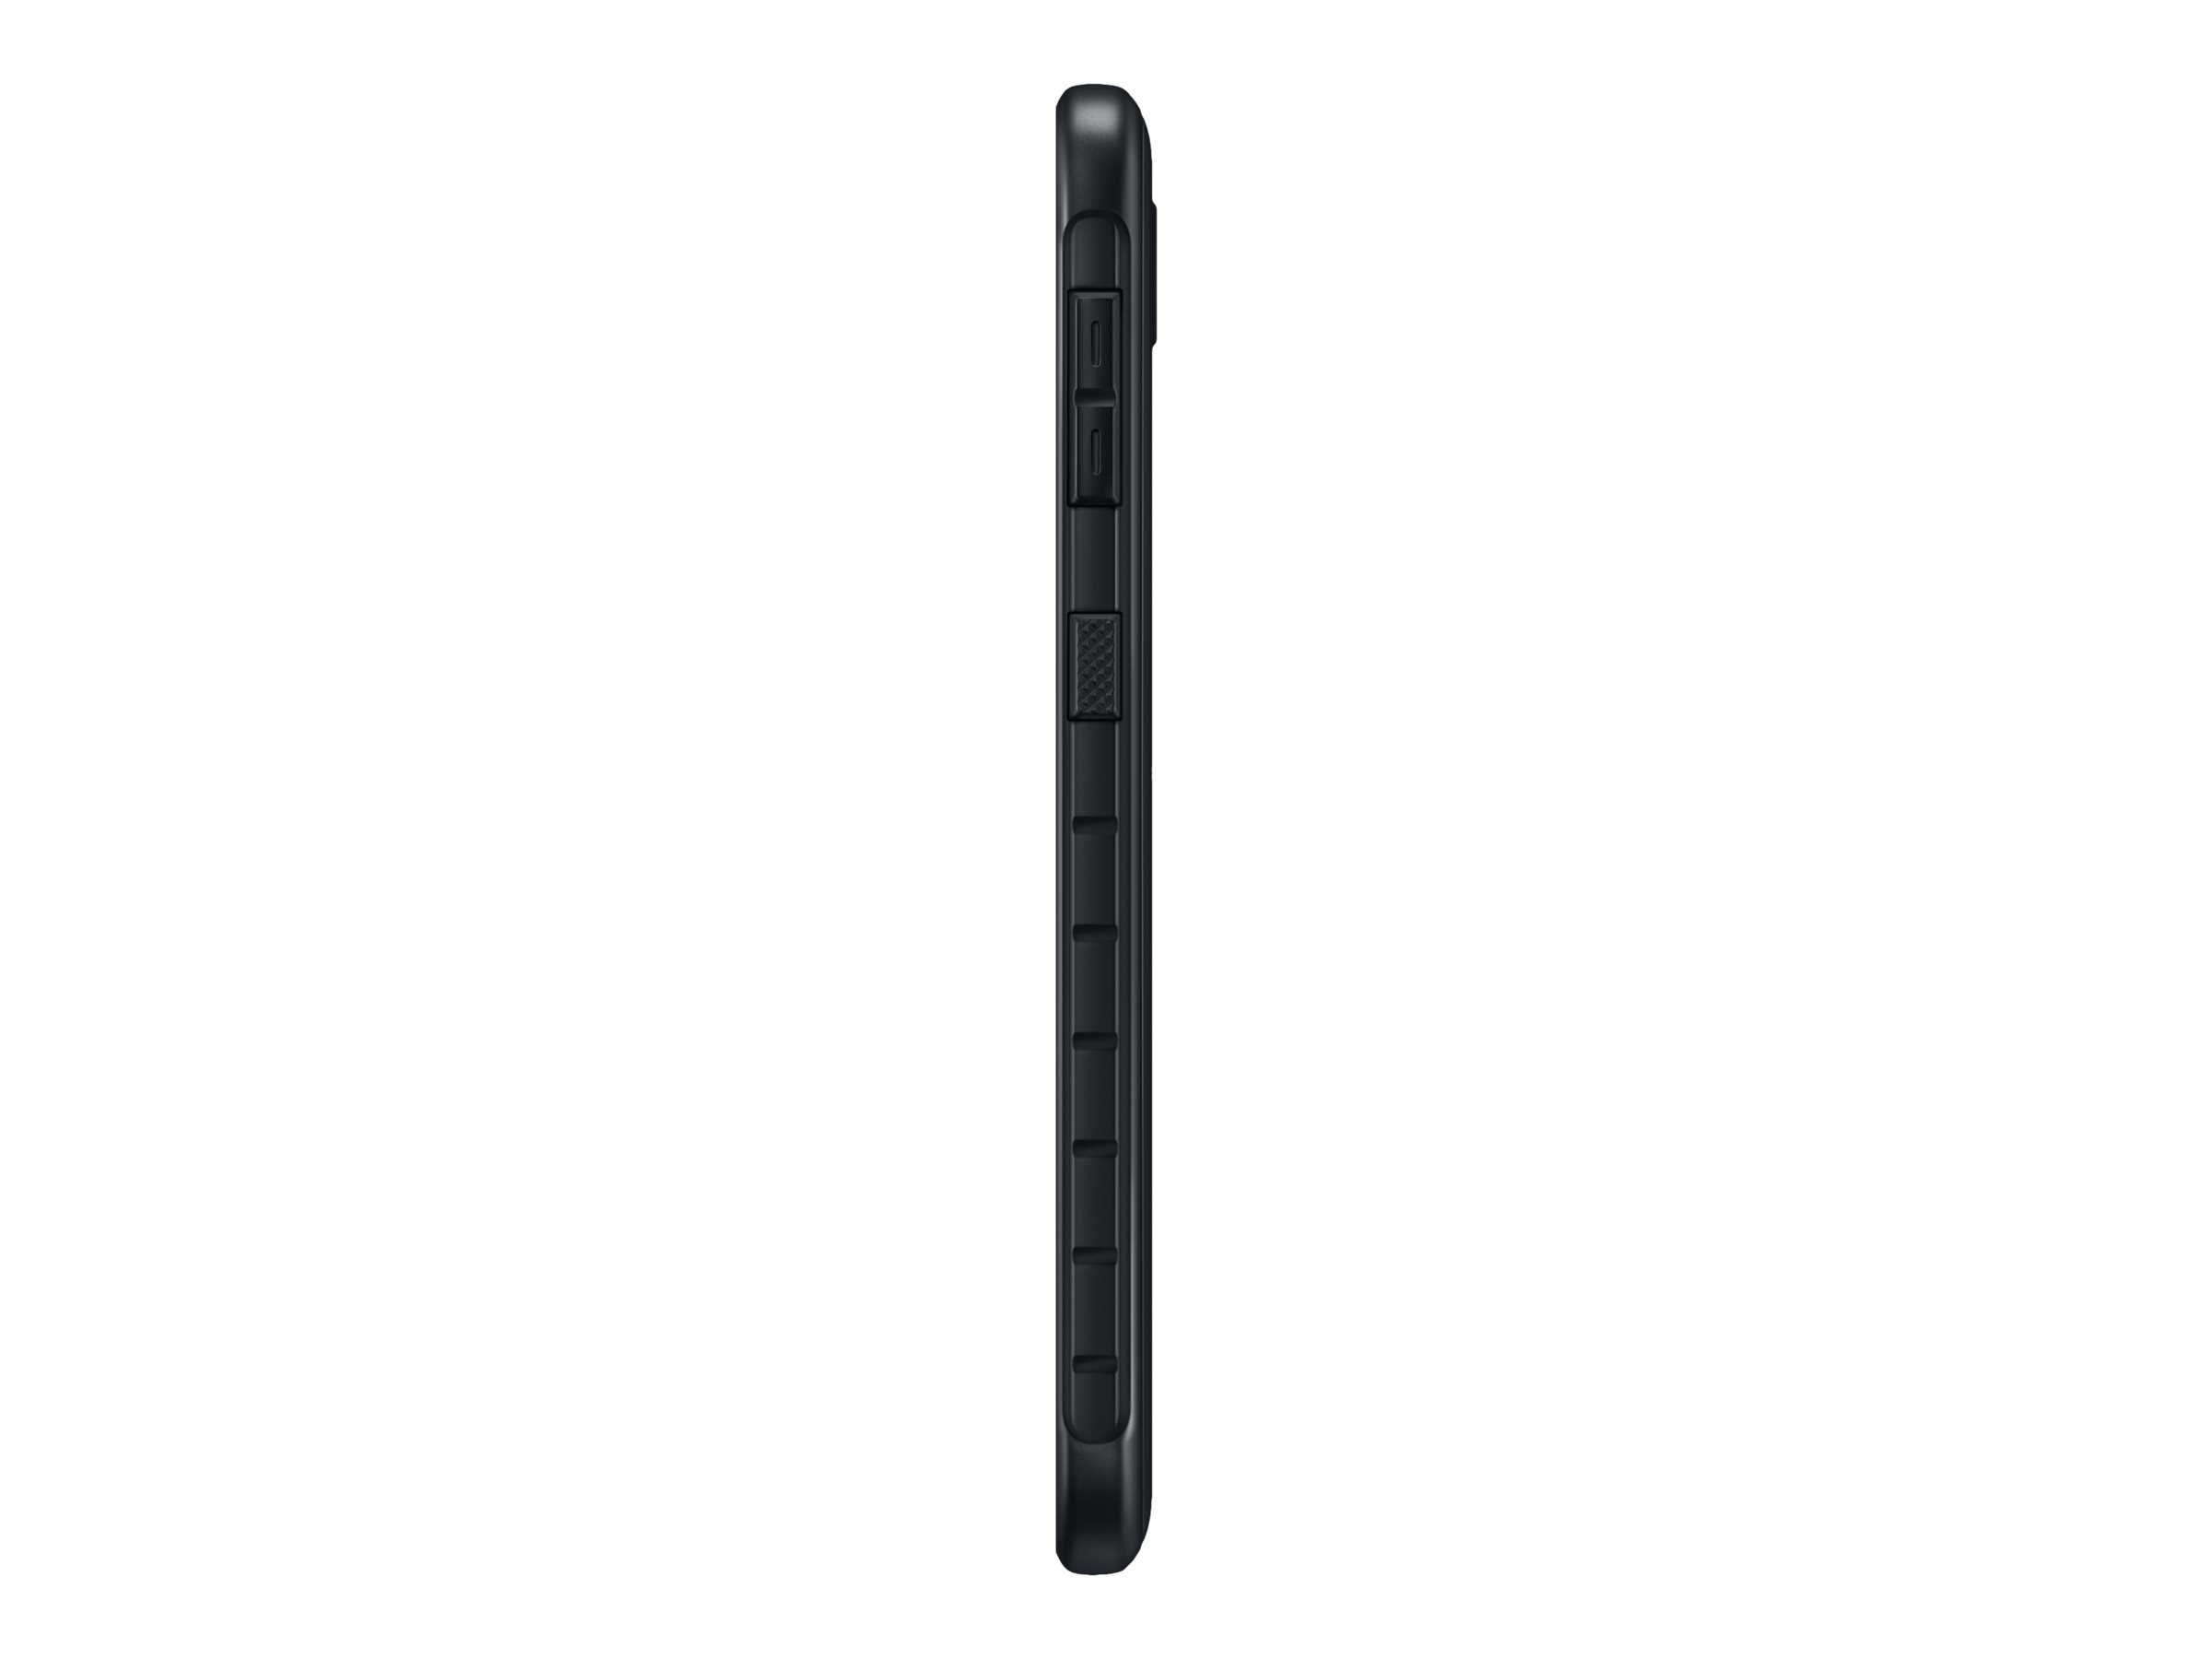 Samsung Galaxy Xcover 5 Enterprise 64GB Black 5.3" DE Model Android